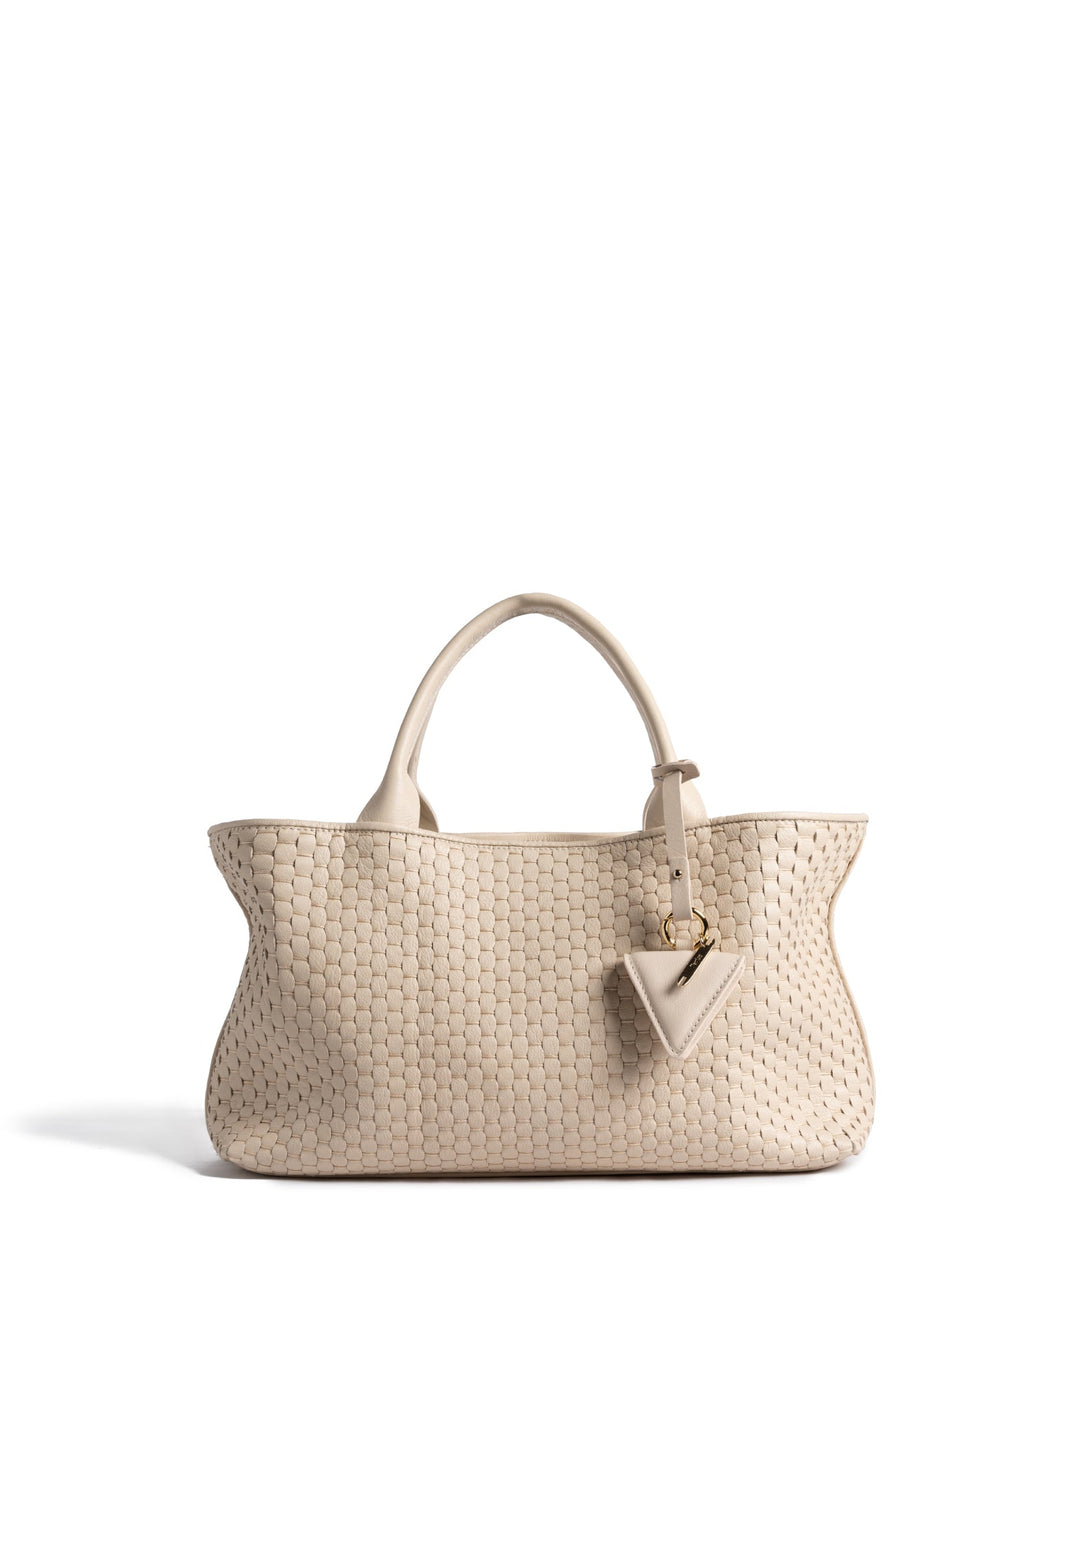 Elegant beige woven handbag with top handles and decorative charm